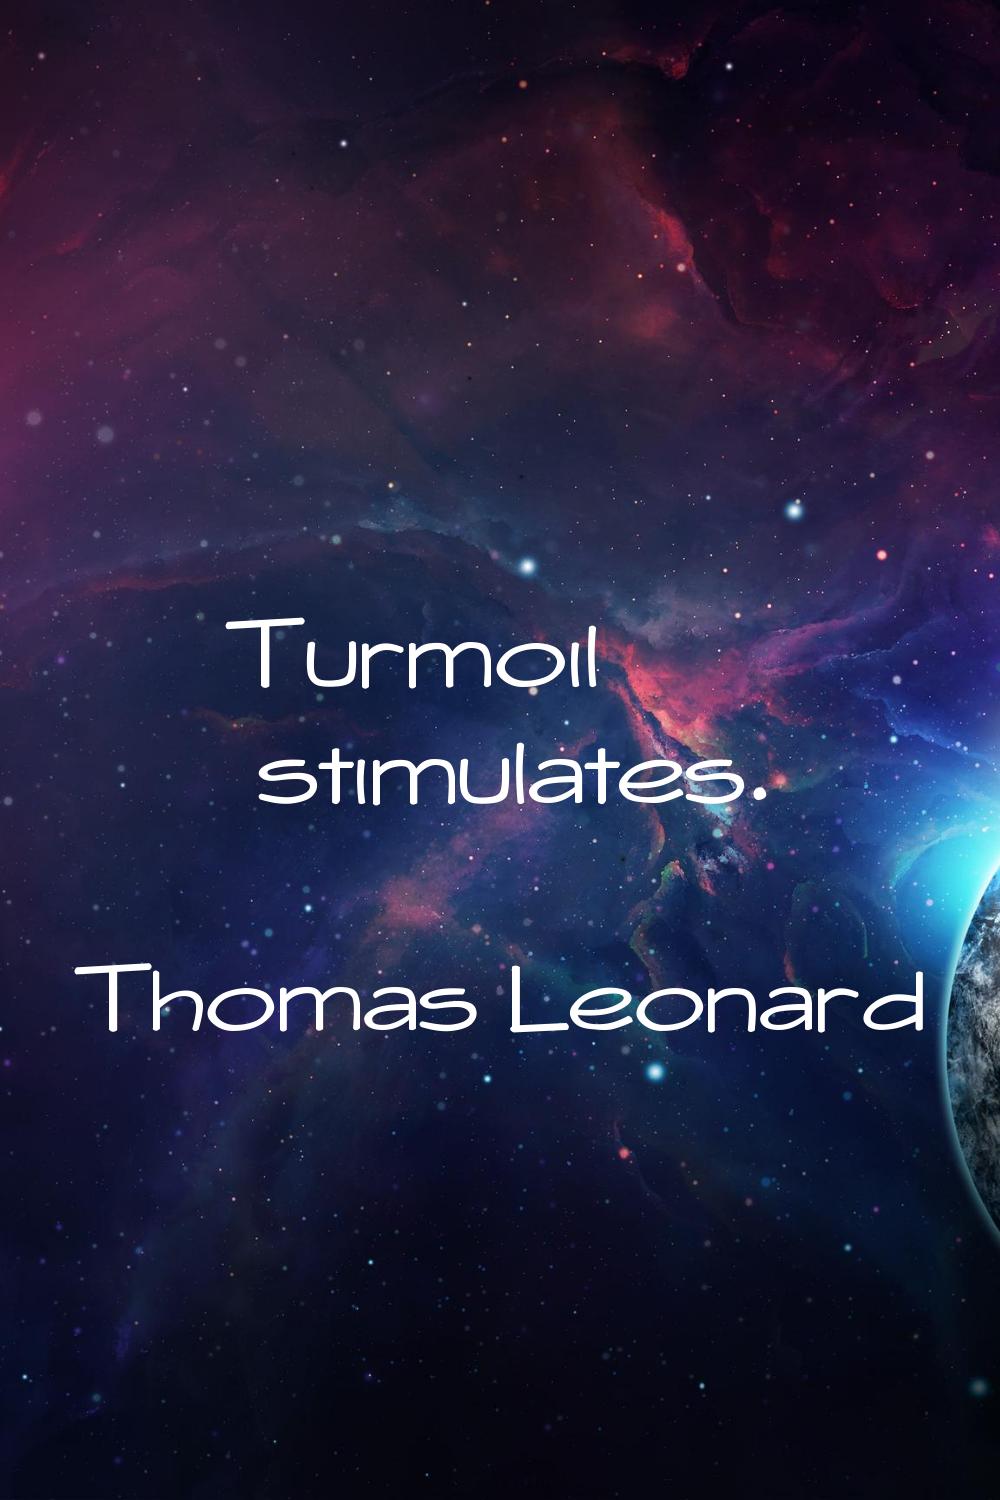 Turmoil stimulates.